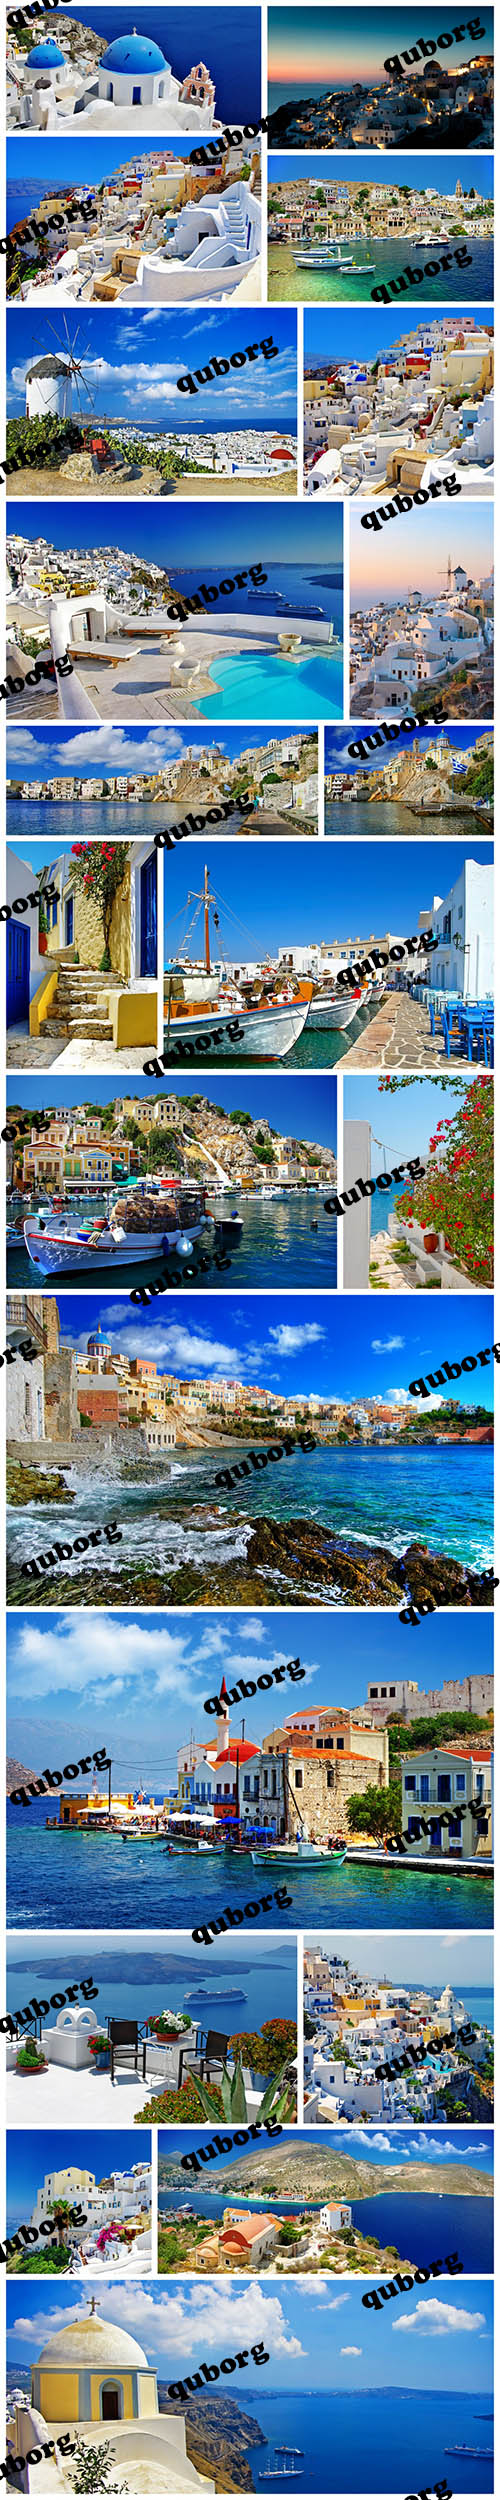 Stock Photos - Welcome to Greece